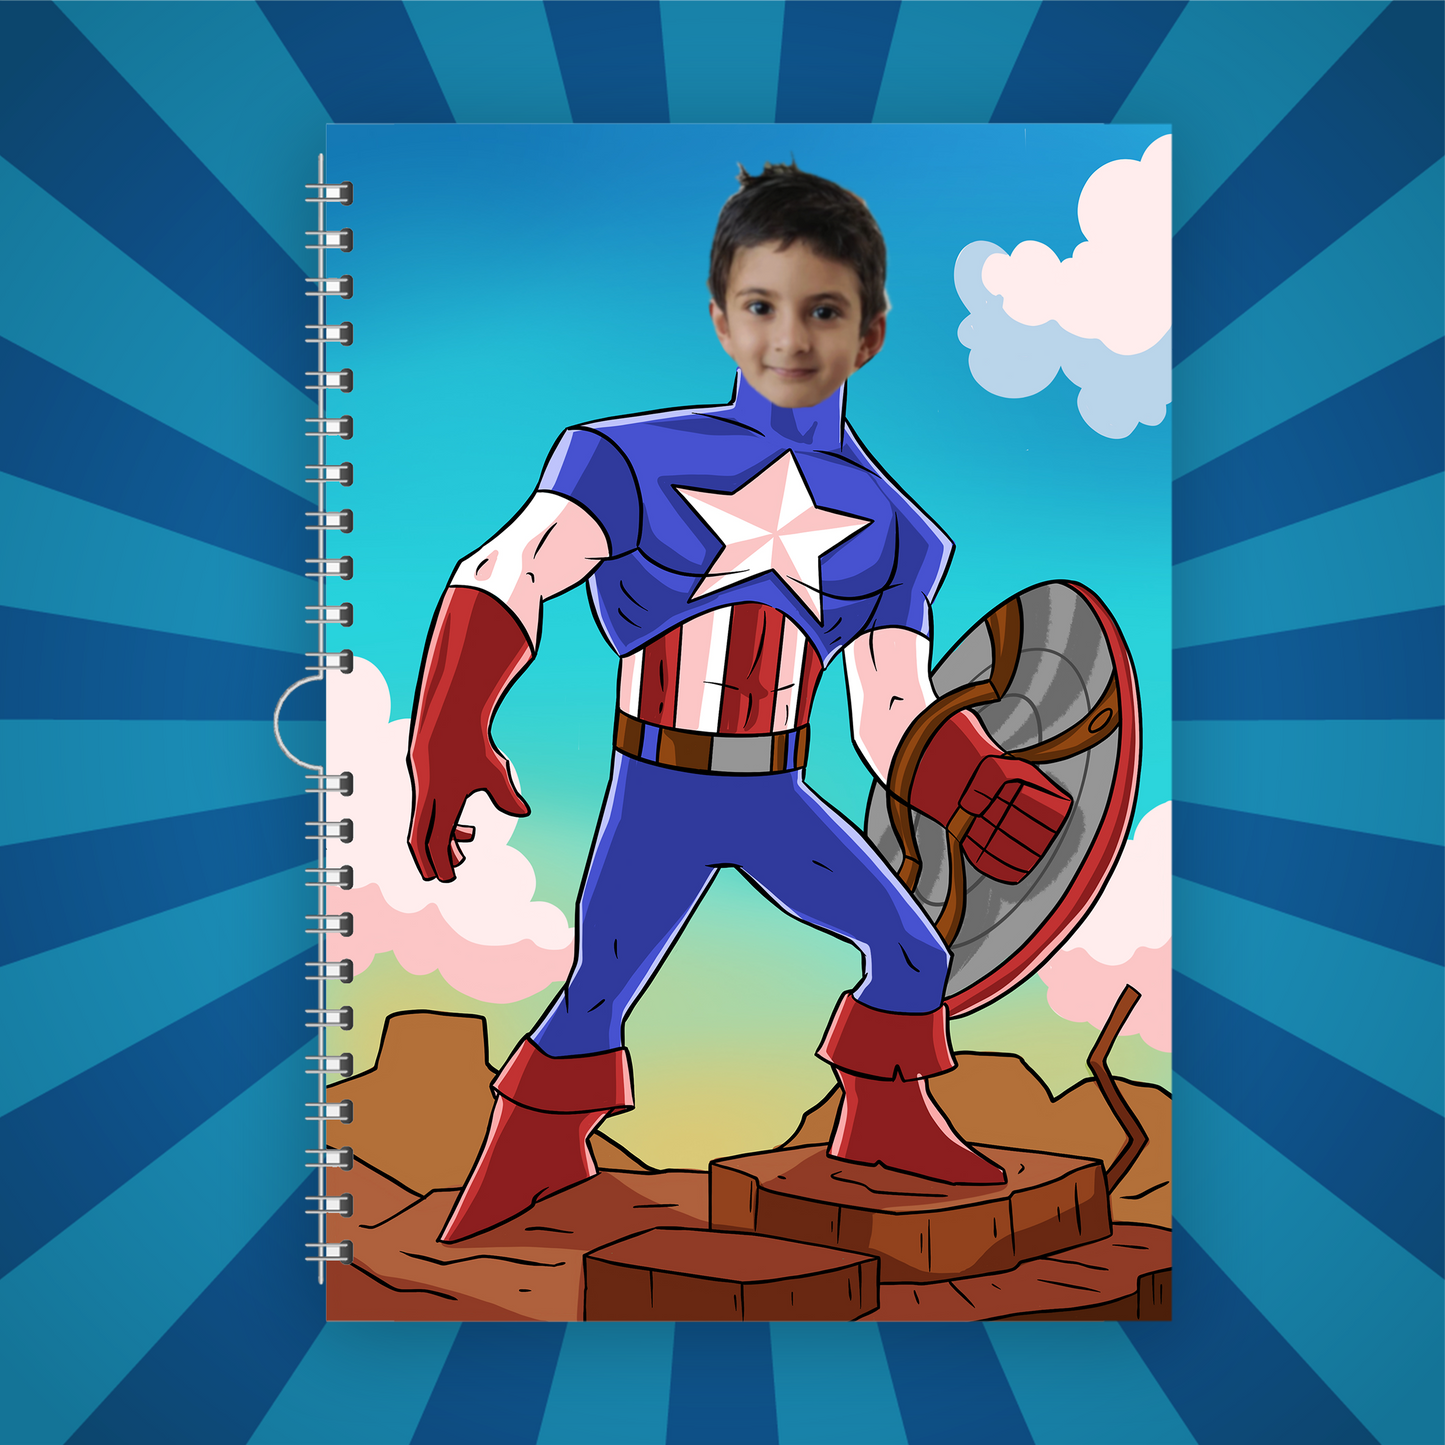 Personalized Superhero Notebooks (Combos)